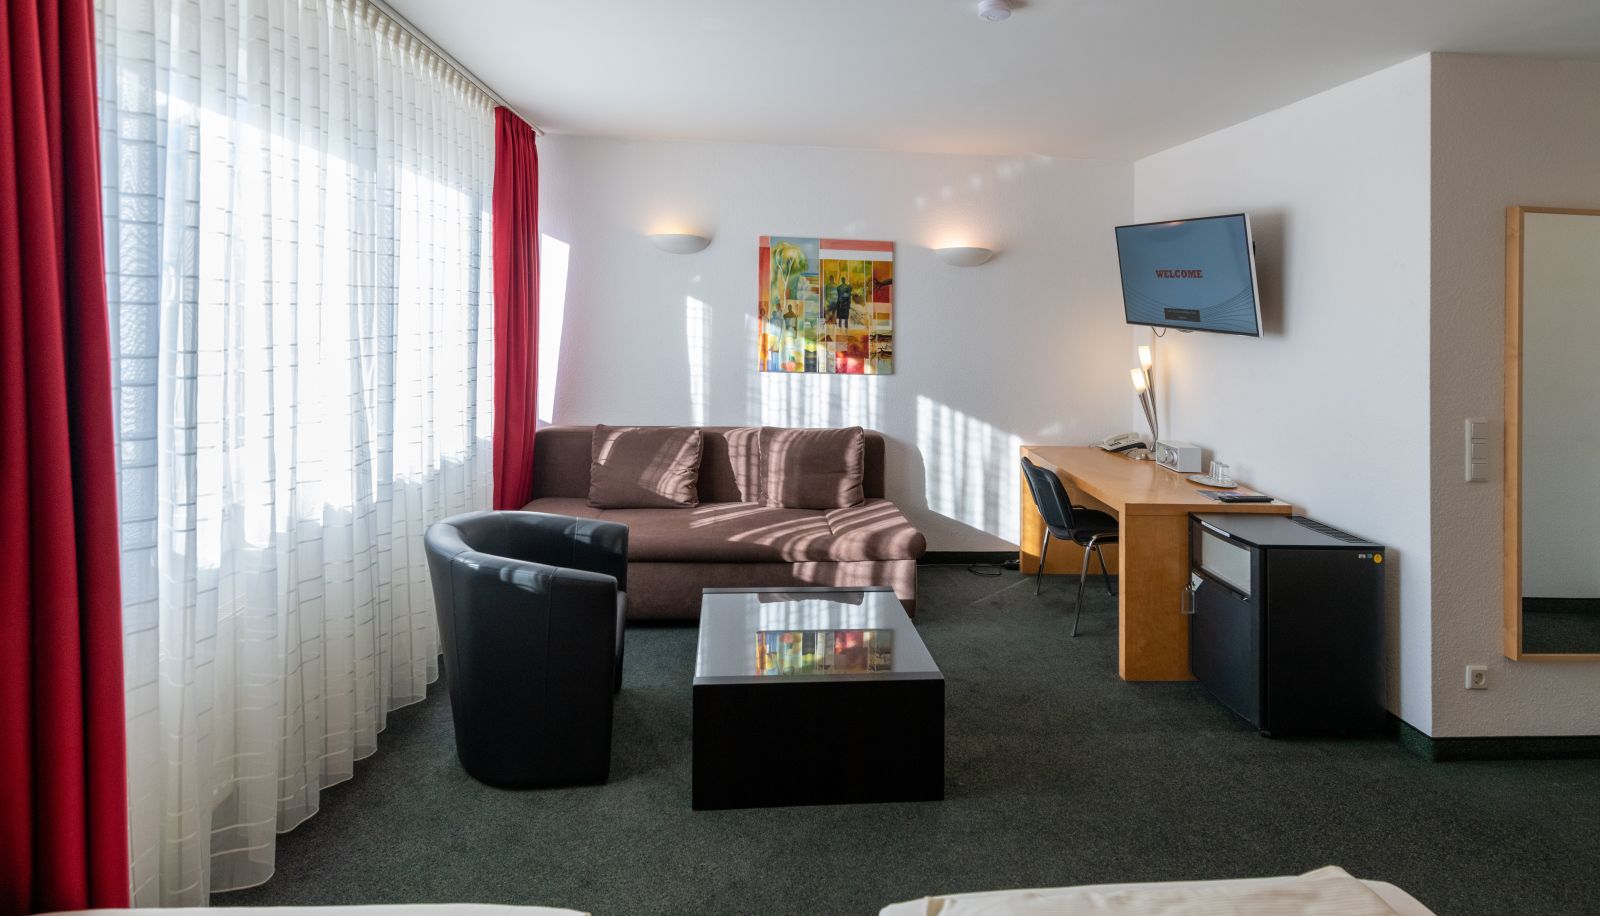 Hotel Bonprix - Brühl - Great prices at HOTEL INFO